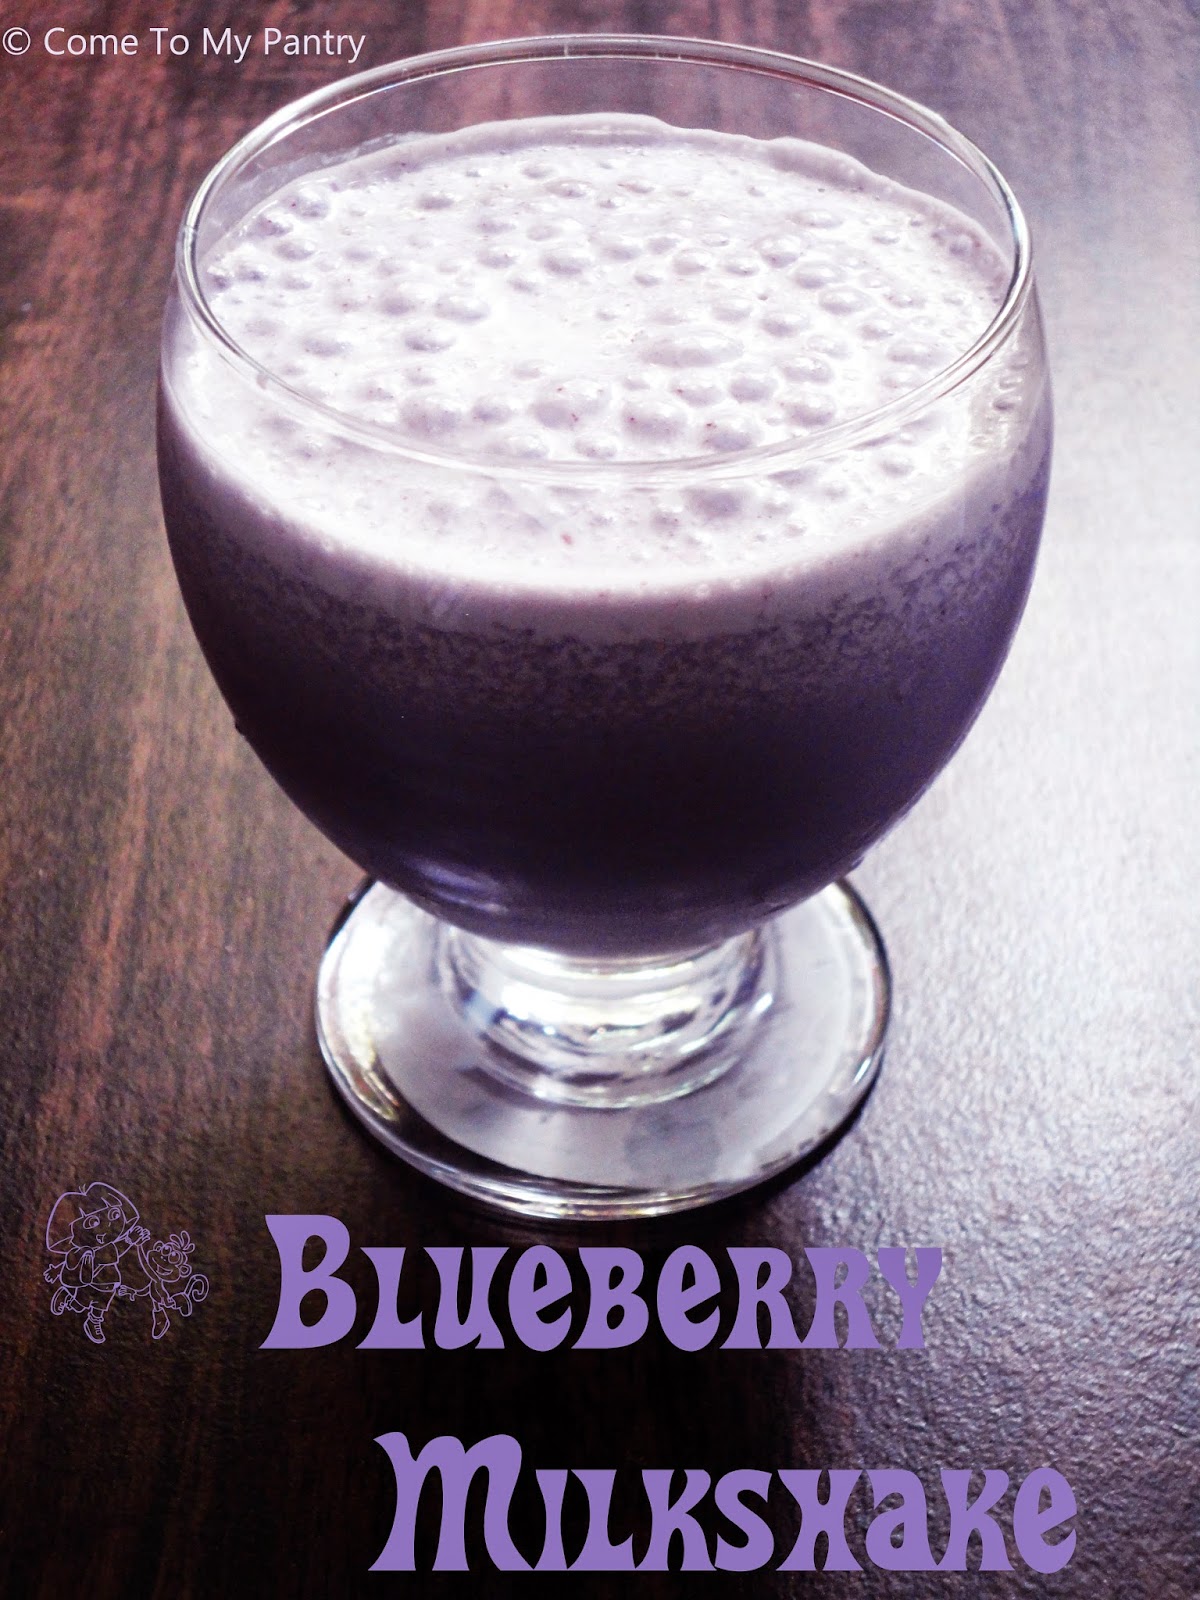 Blueberry Jam Milkshake | Inky Blue Milkshake | Jam Milkshake